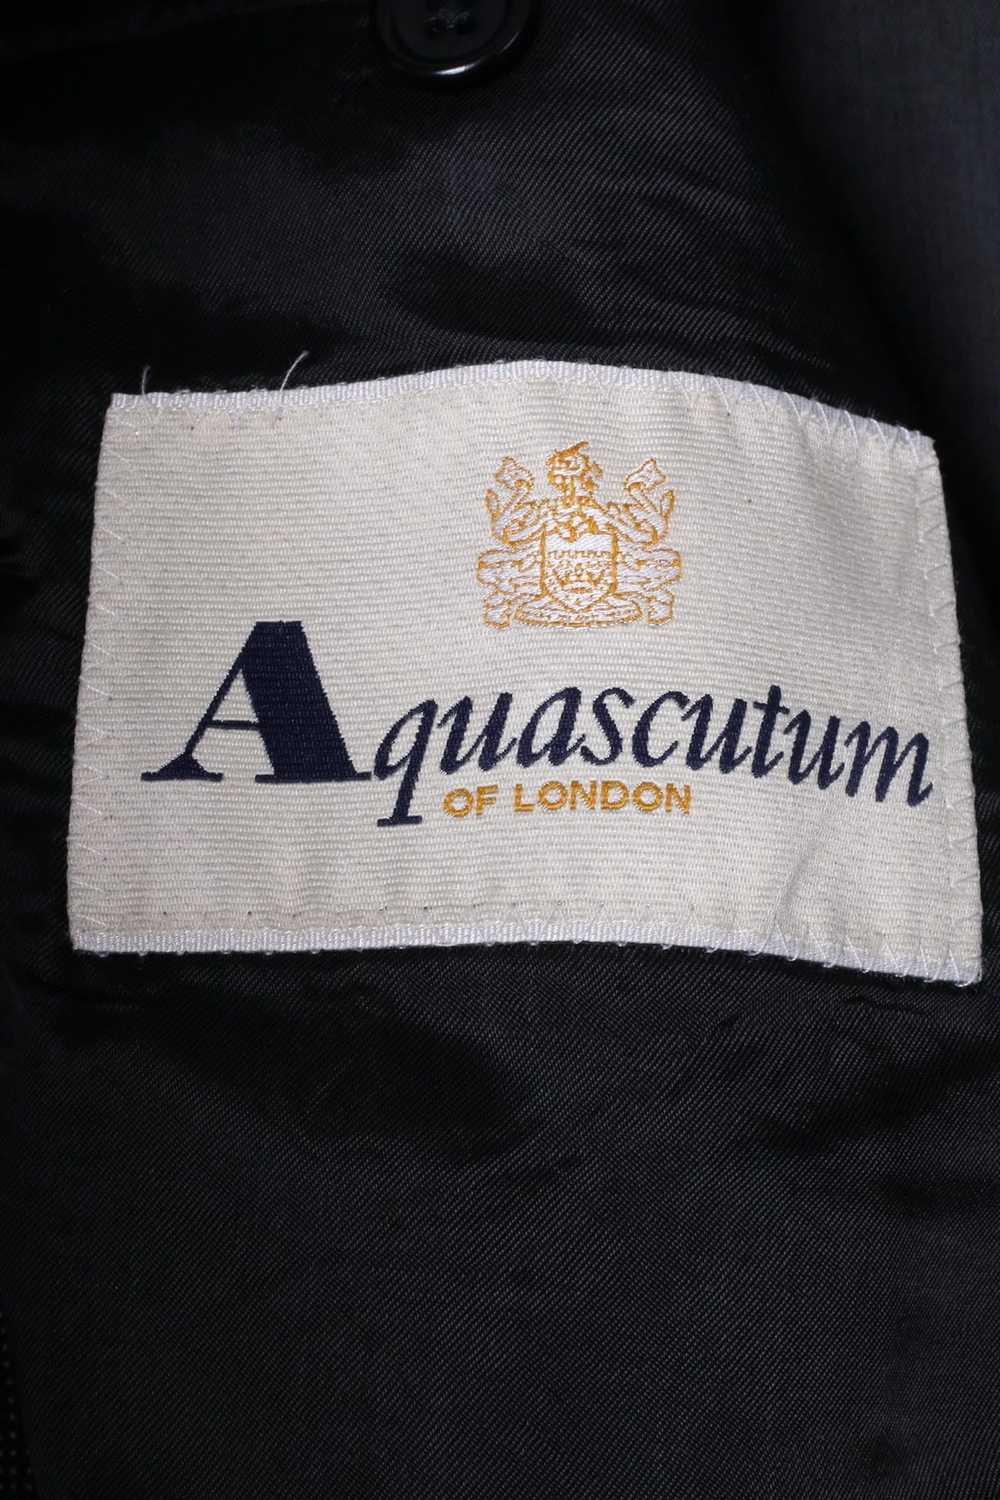 Aquascutum Aquascutum of London Mens 42 R S Blaze… - image 4